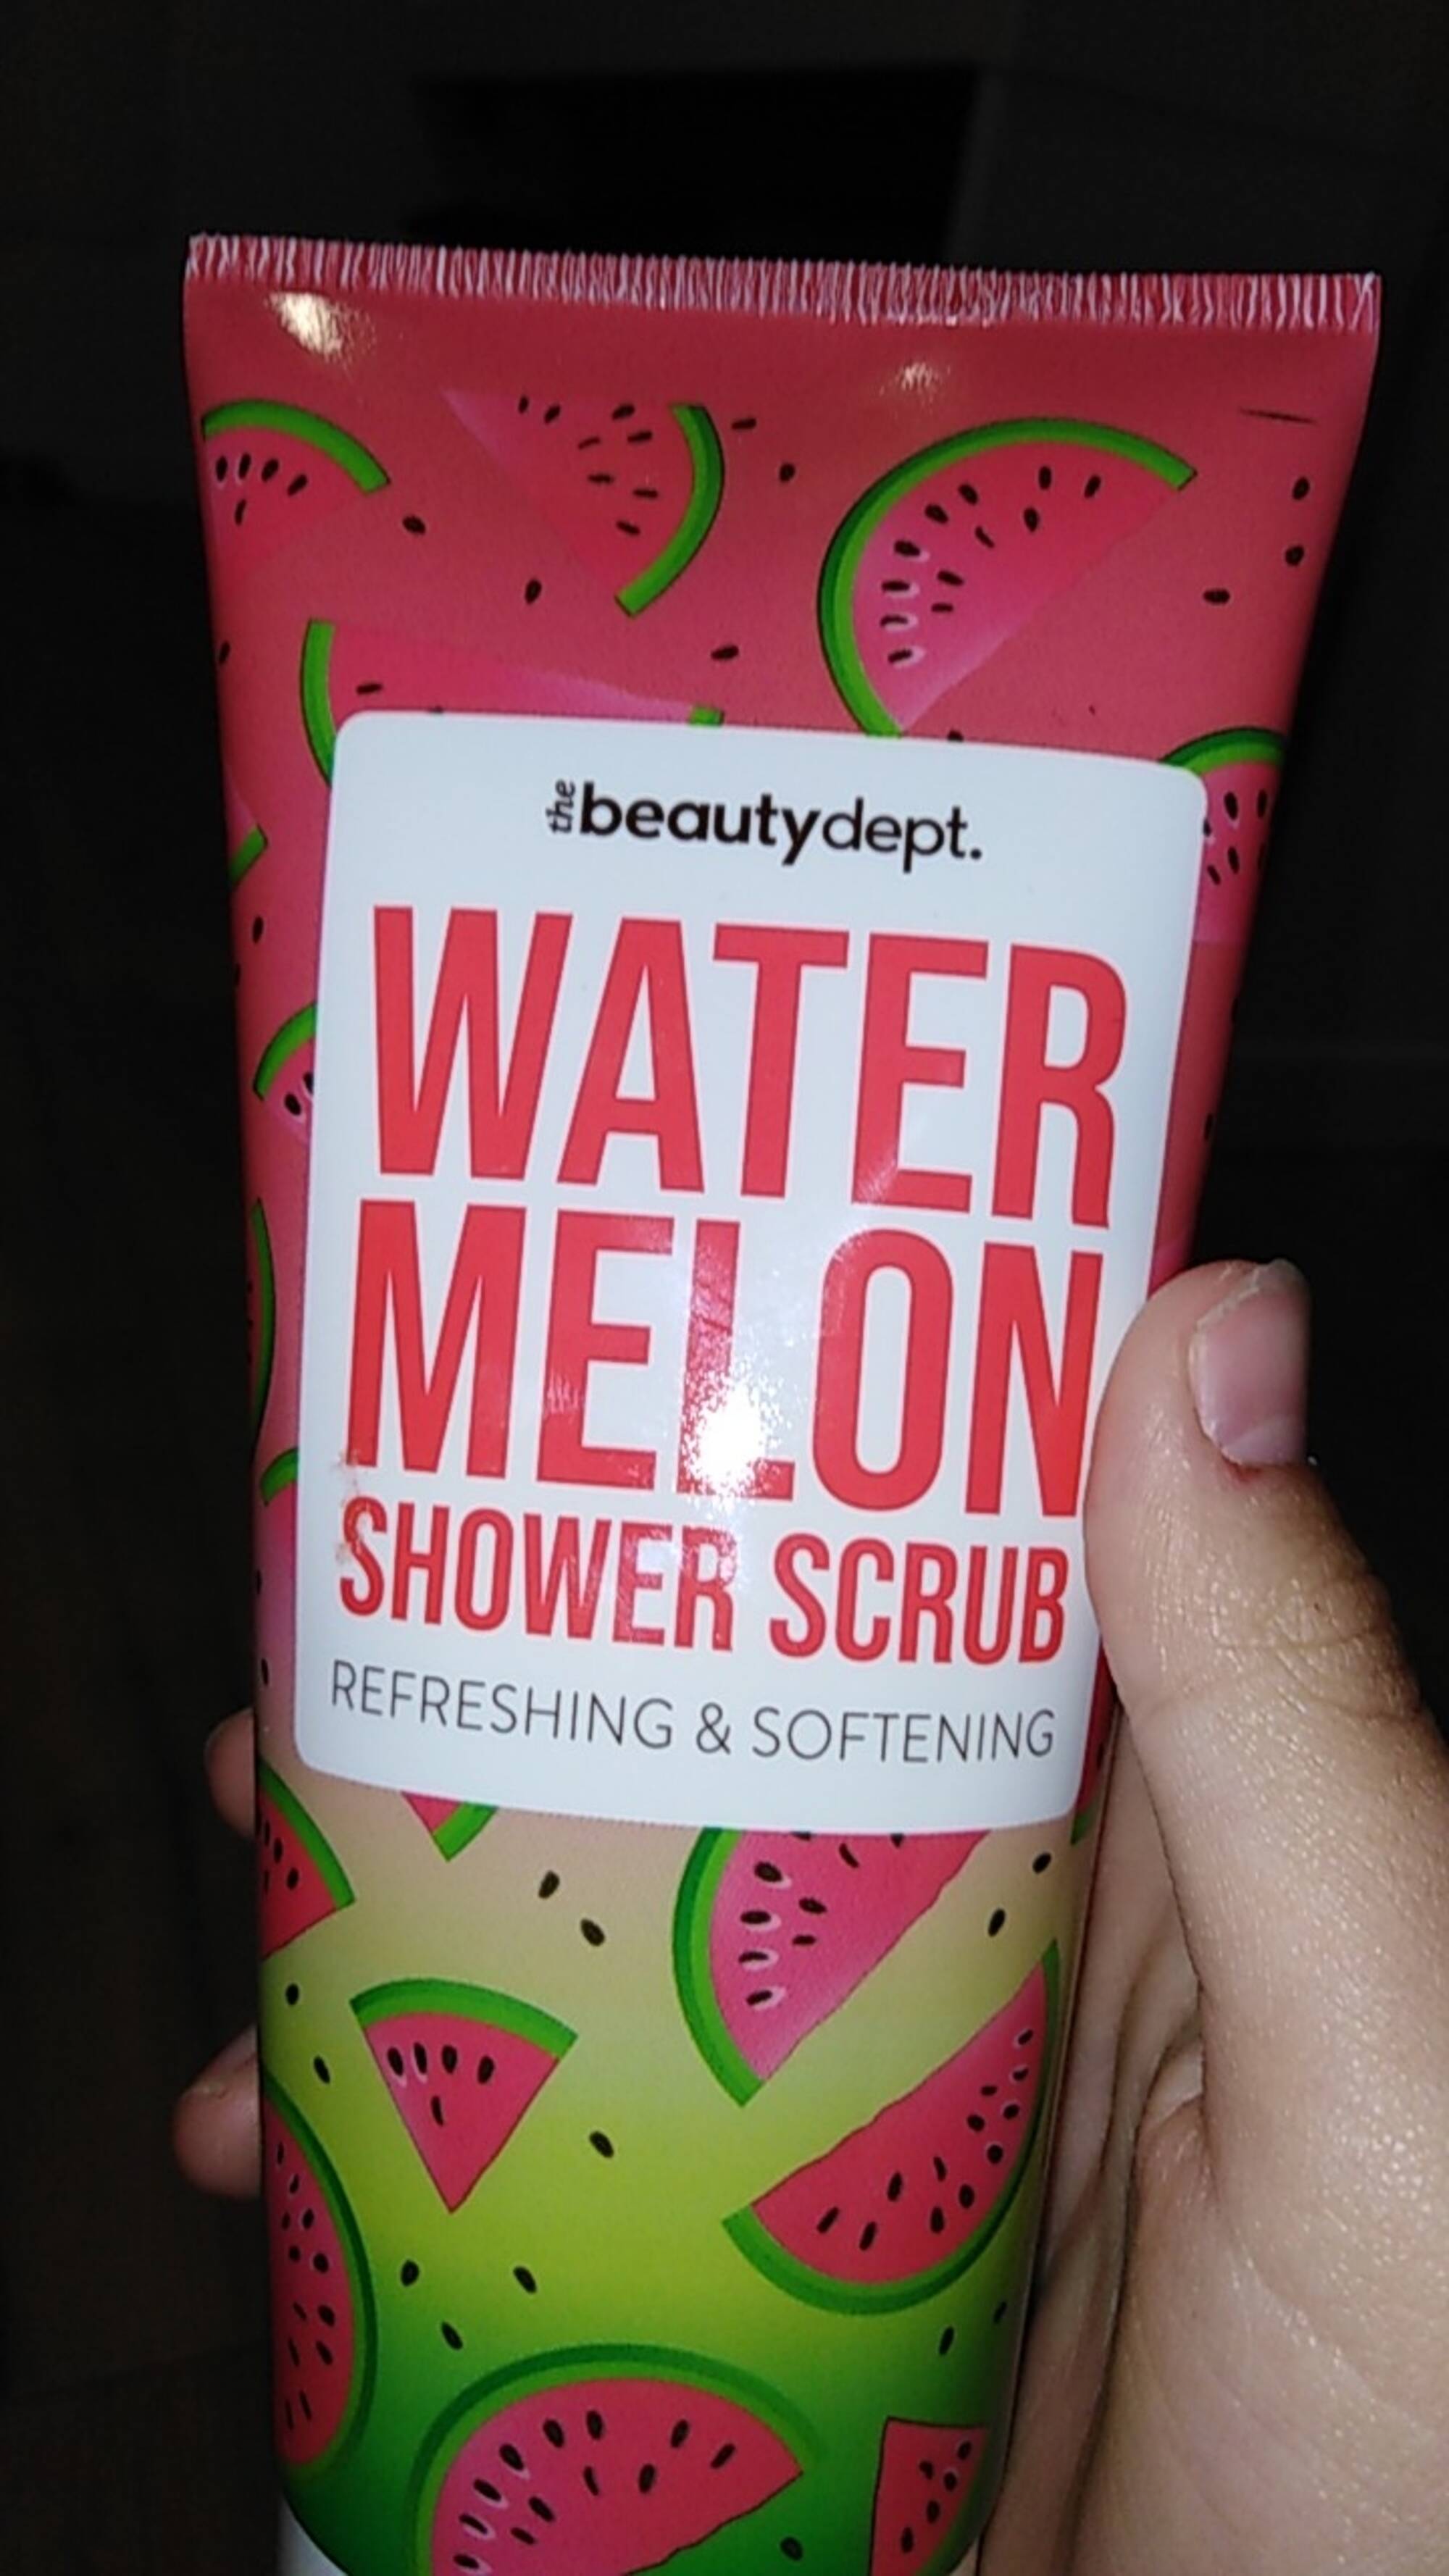 THE BEAUTY DEPT - Water Melon - Shower Scrub